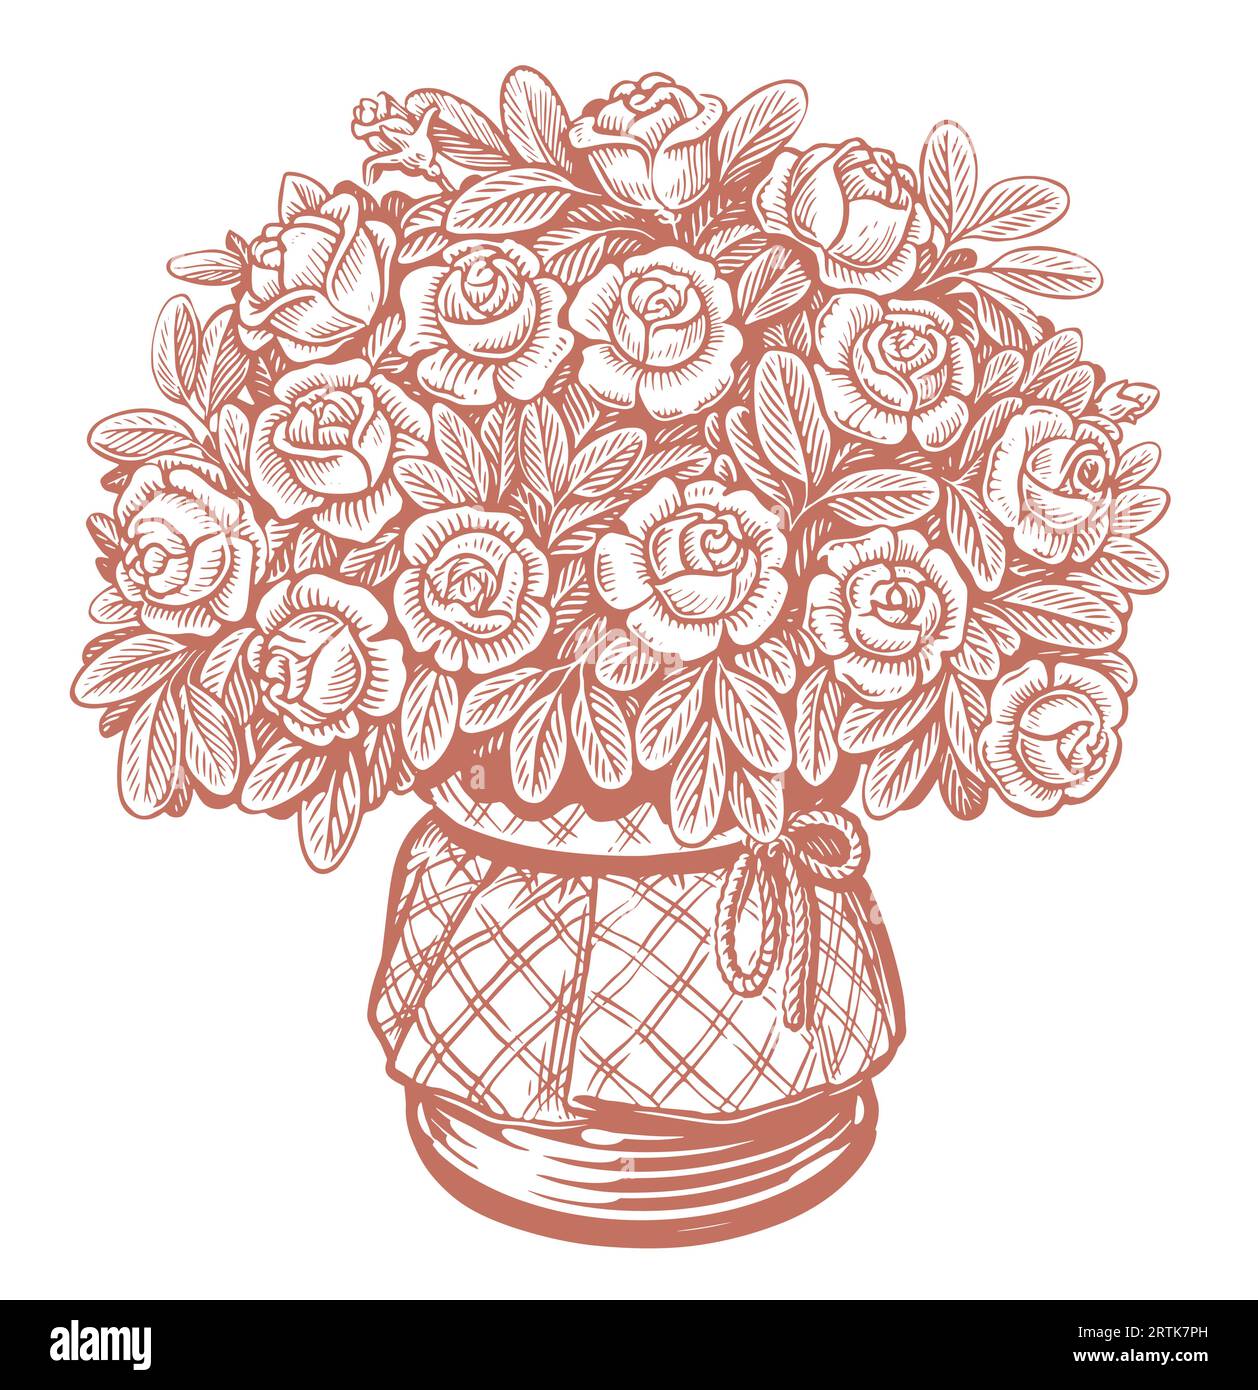 Rosen mit Blättern im Topf. Blumenstrauß im Vintage-Stil. Skizzenvektorillustration Stock Vektor